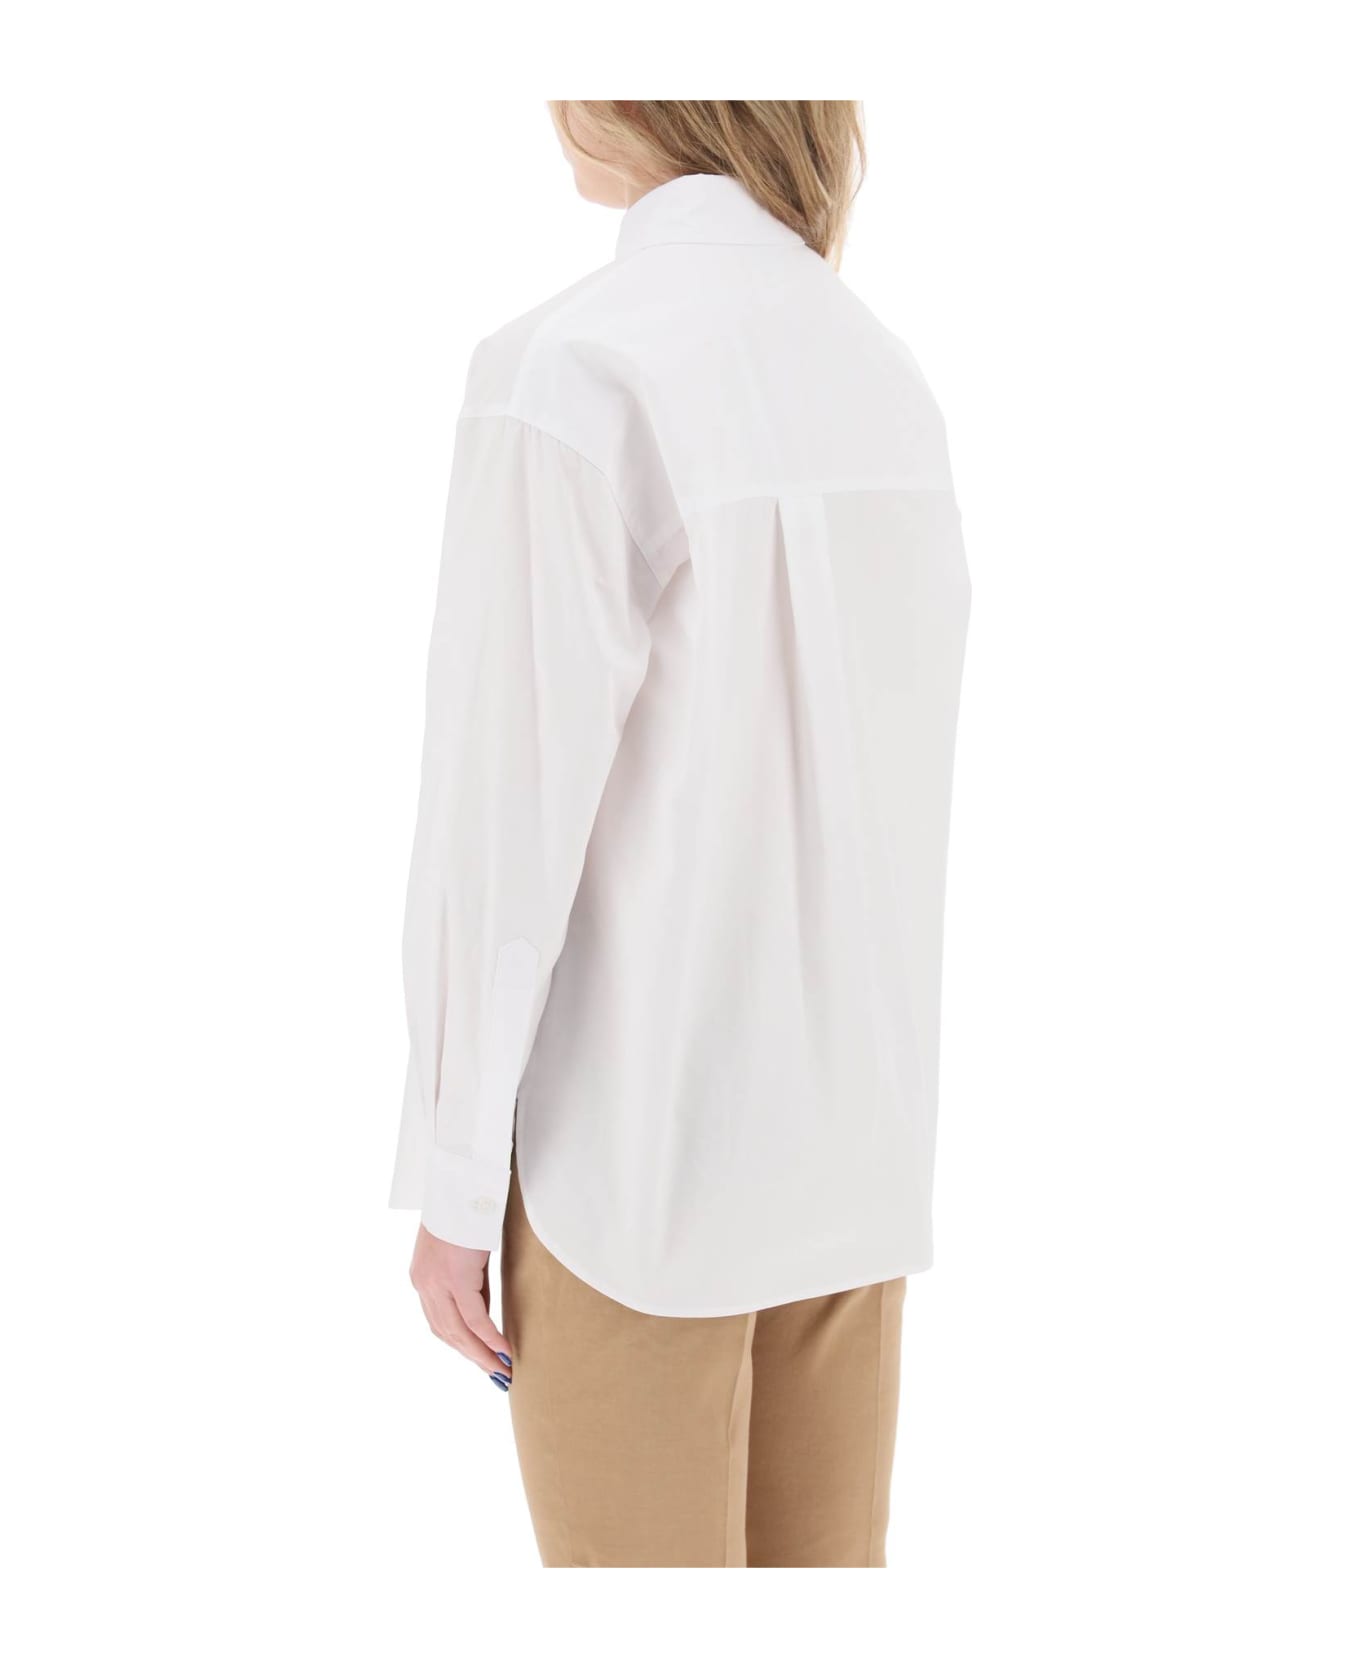 Pinko Cotton Popeline Shirt - BIANCO BRILLANTE (White) シャツ